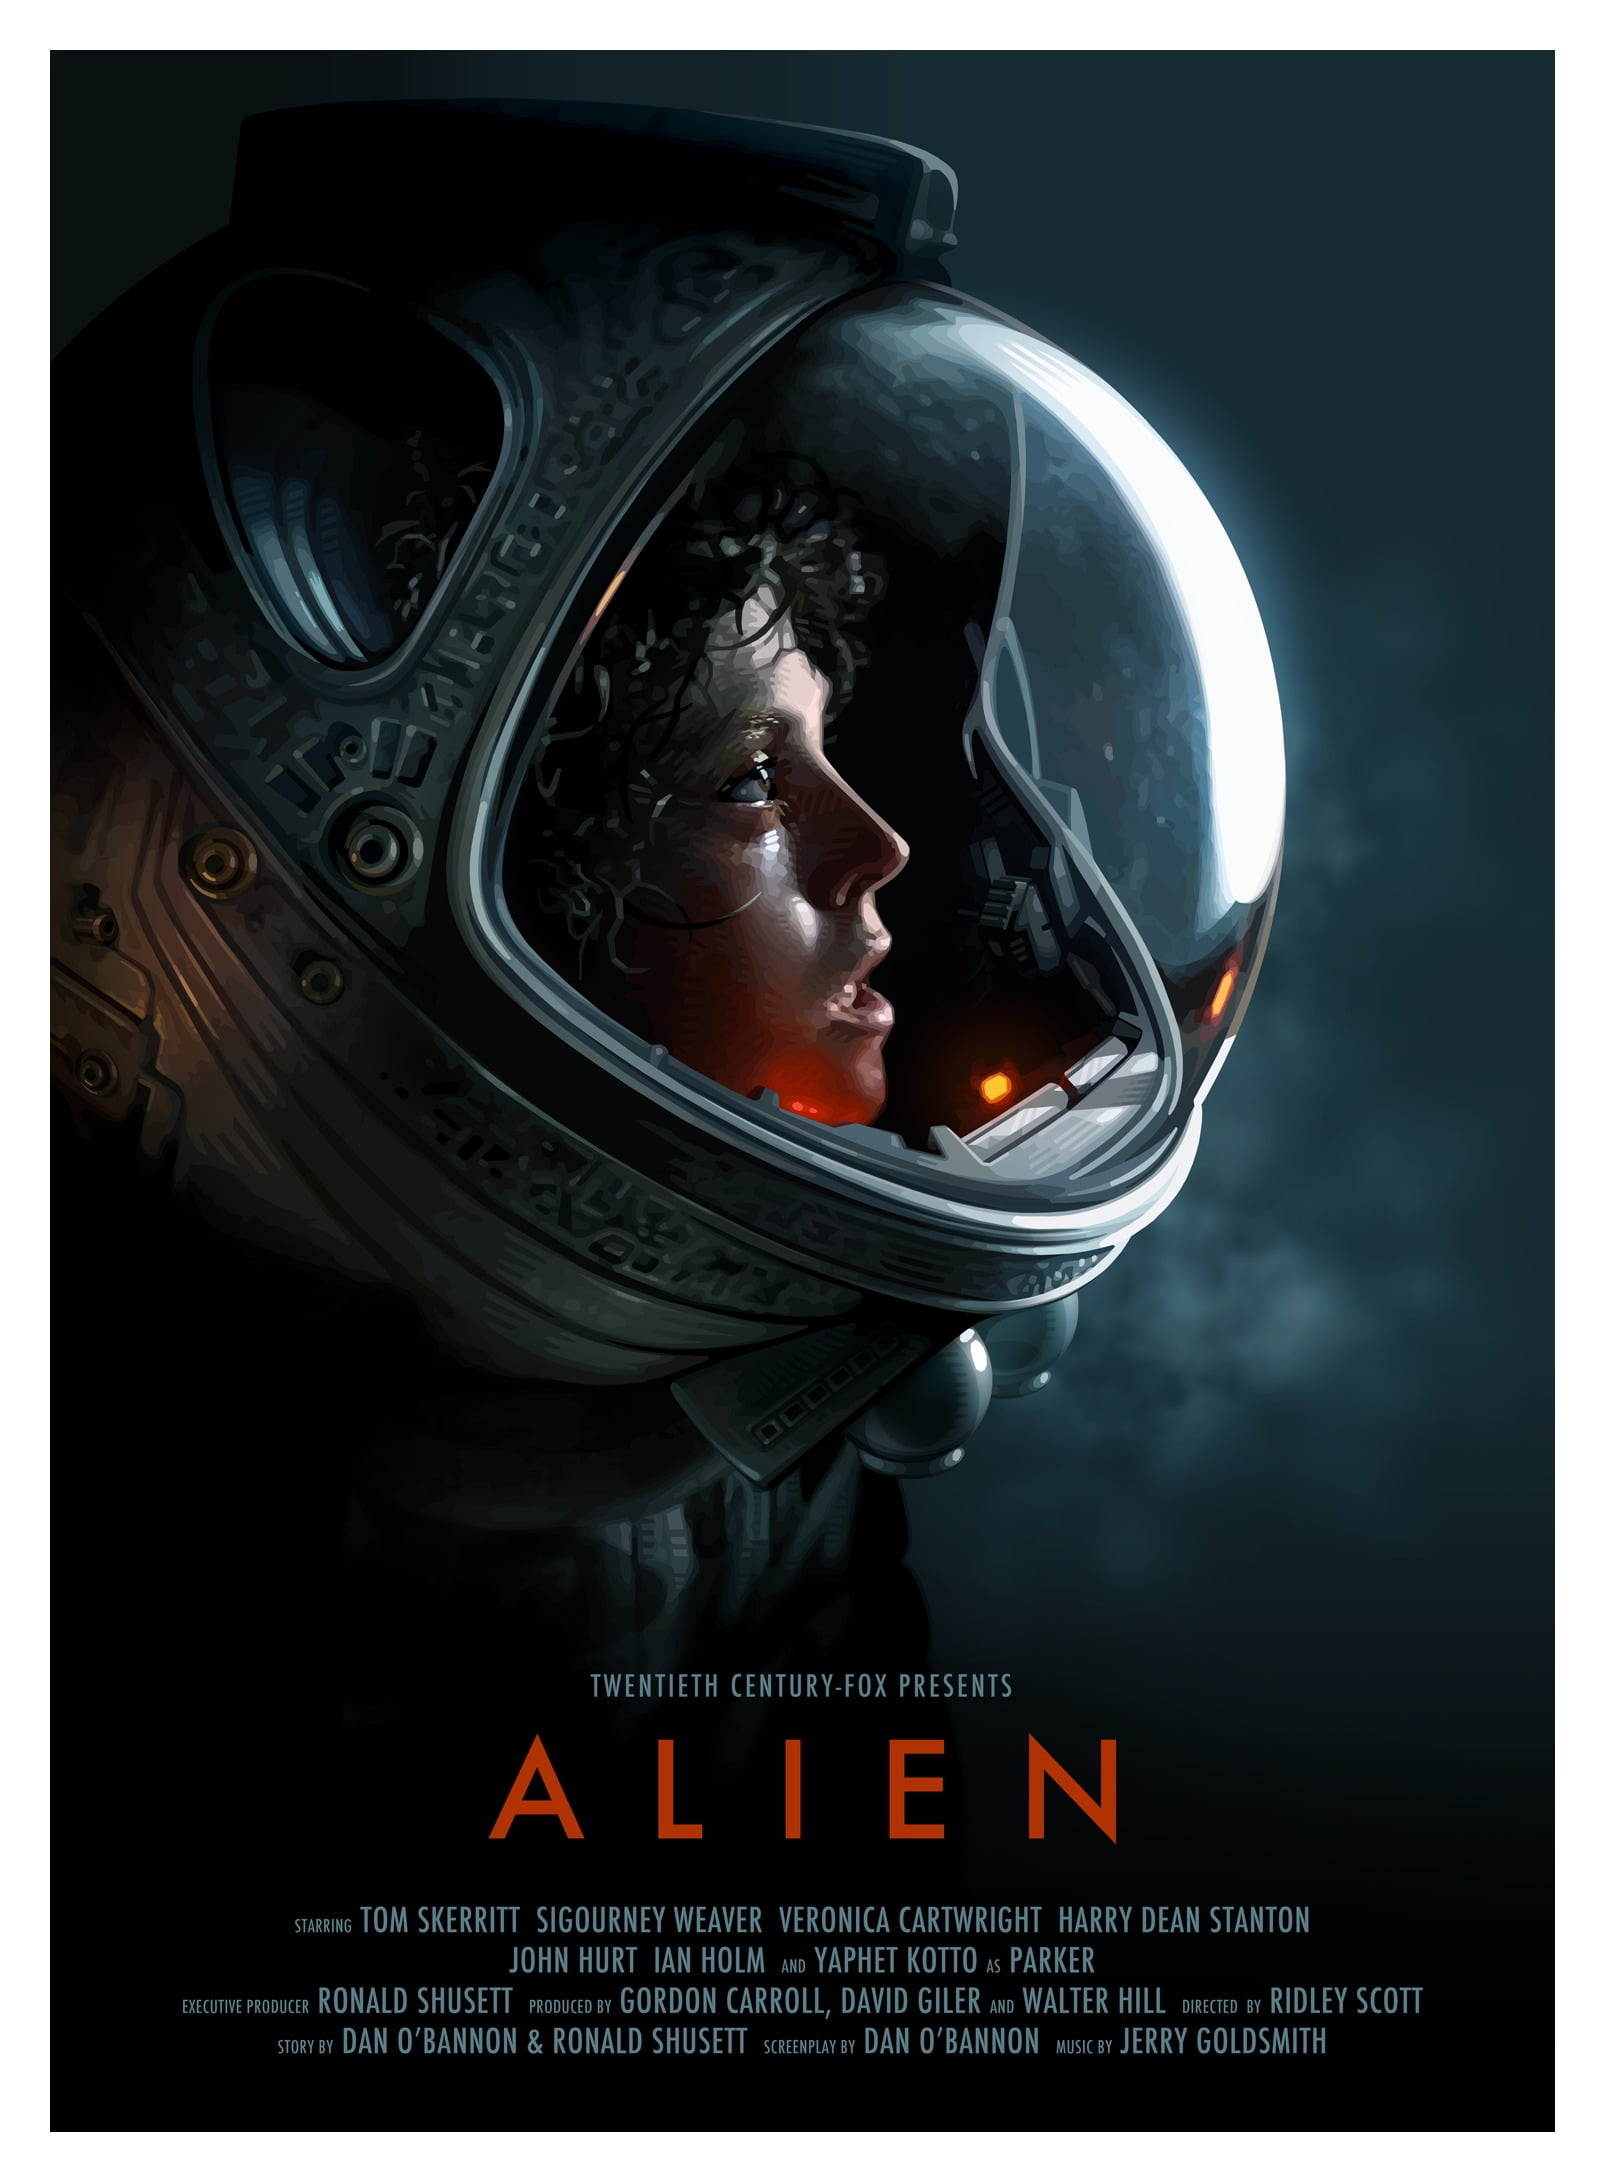 Alien movie wallpaper, Alien (movie), poster, Sigourney Weaver